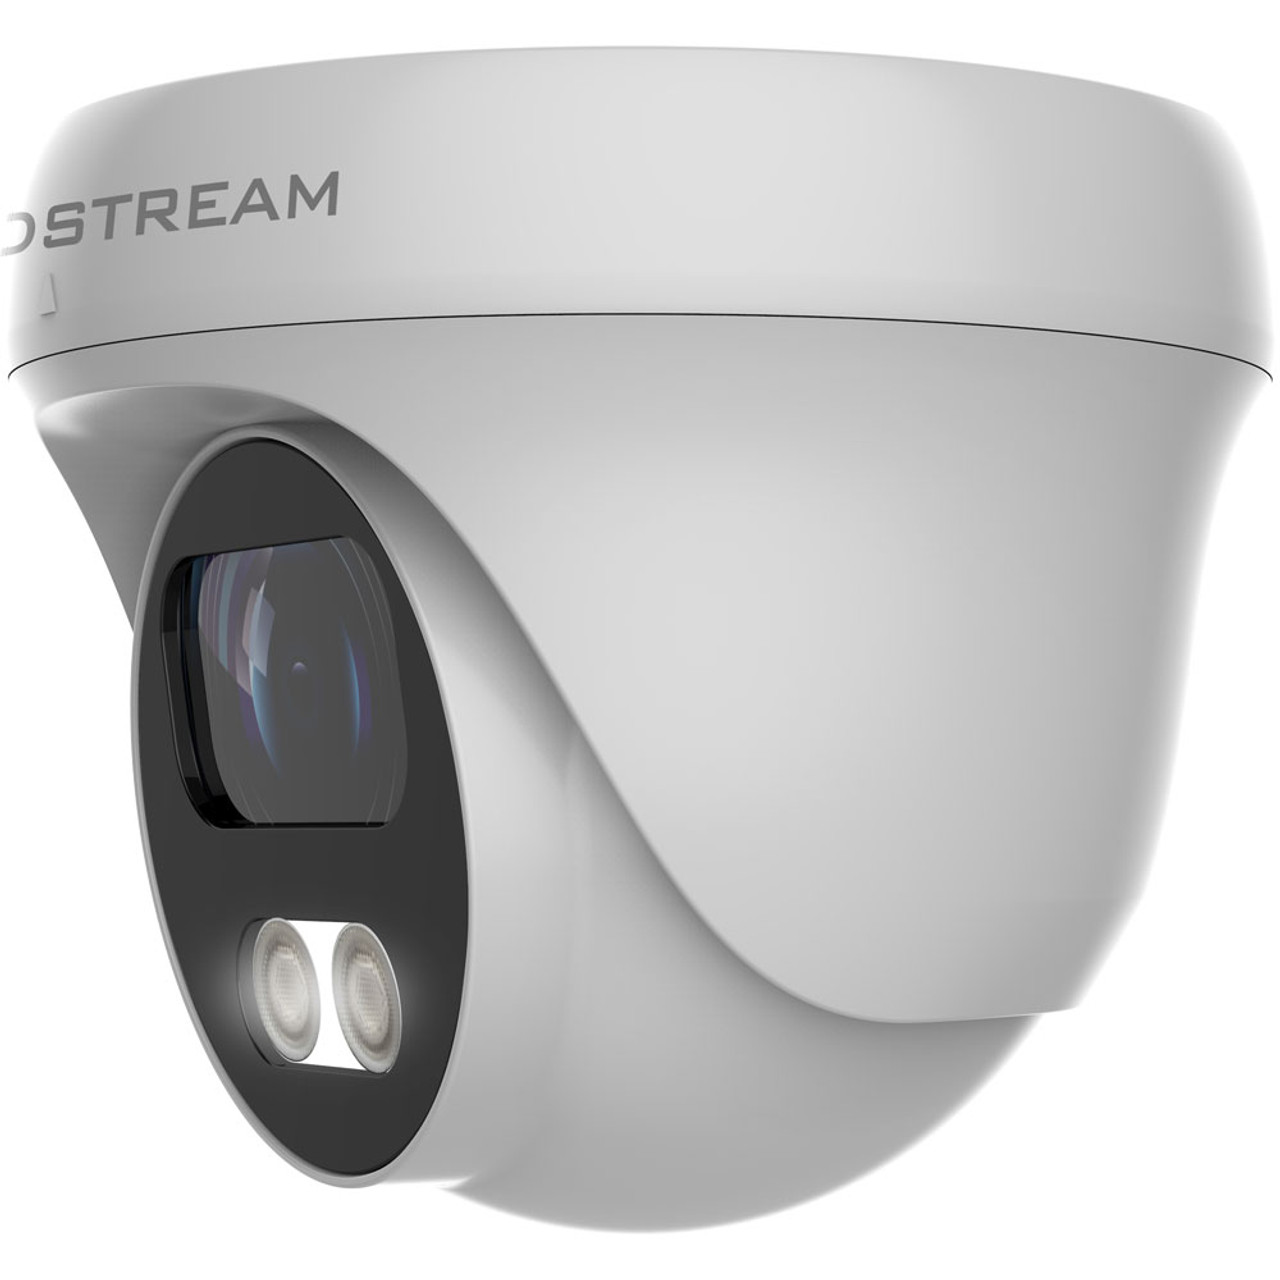 Grandstream-GSC3610-Dome-IP-Security-Camera view a